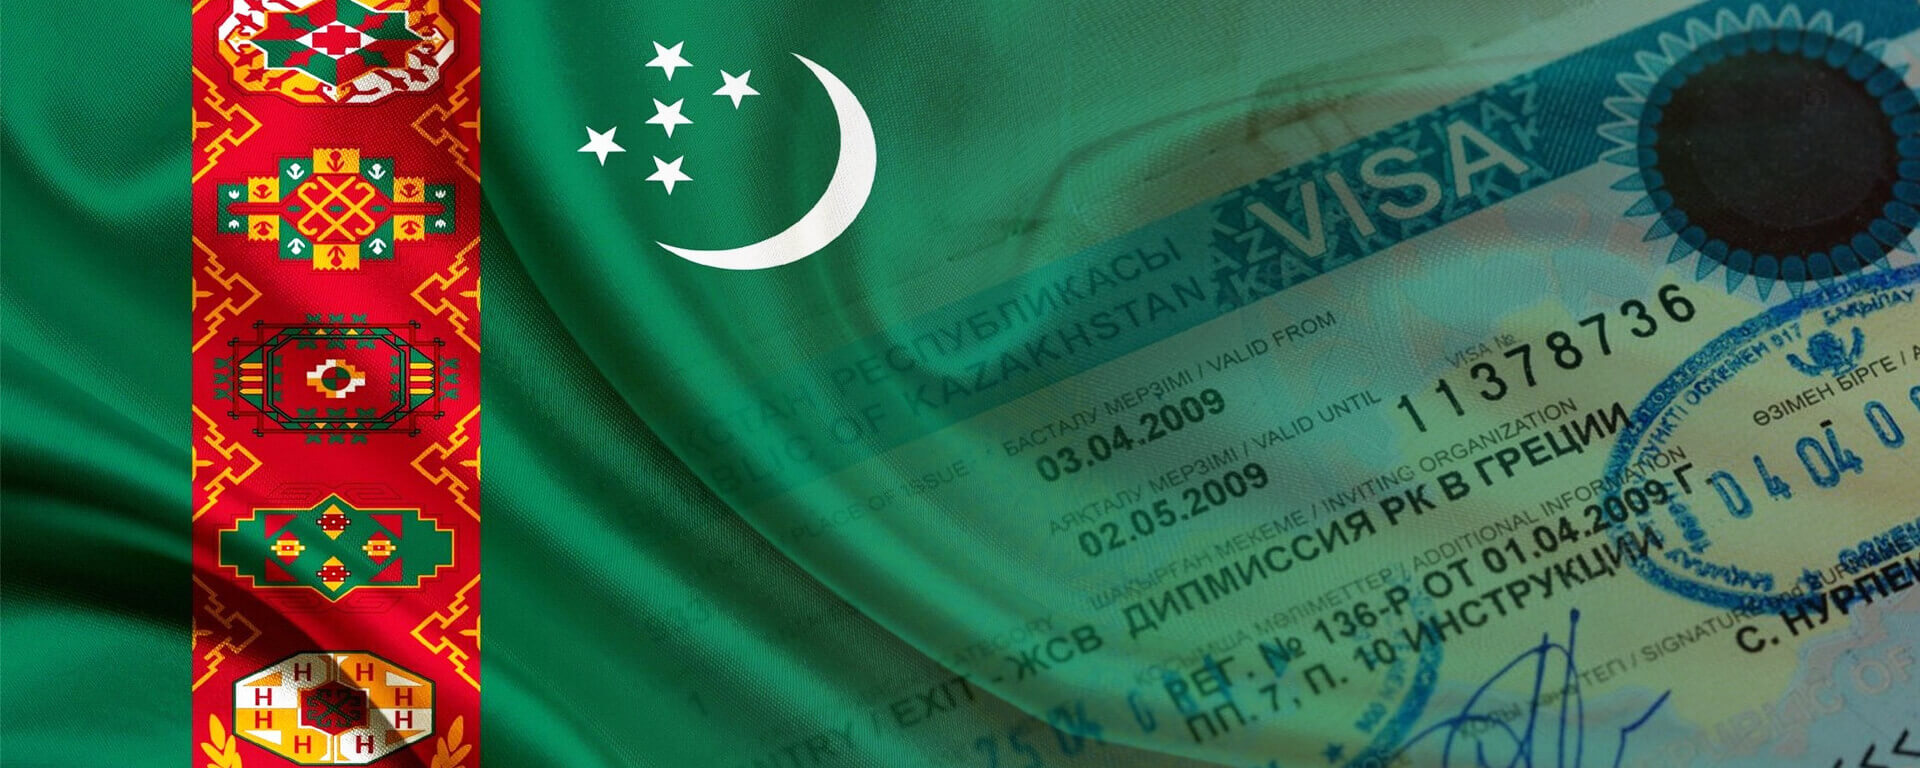 turkmenistan tourist visa for indian